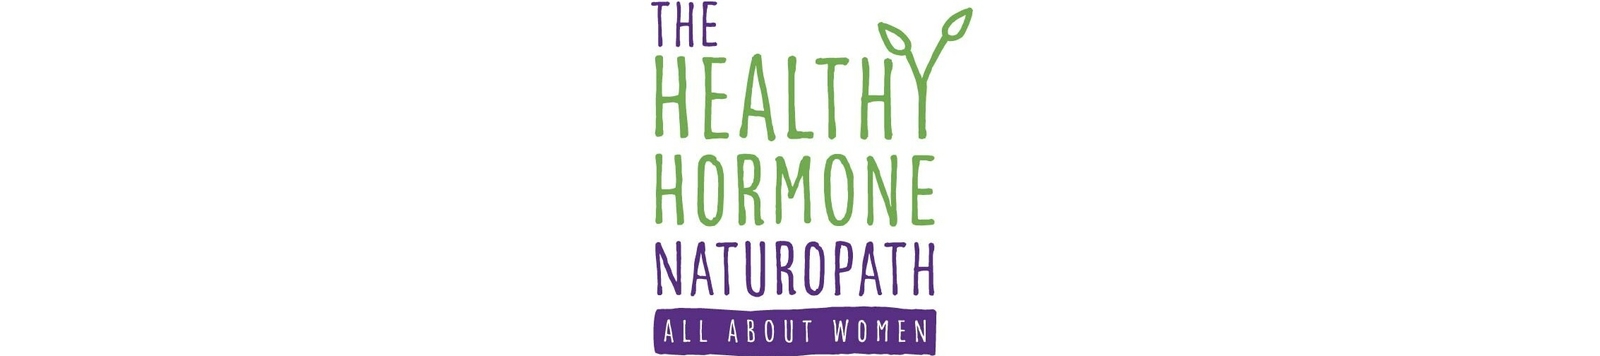 The Healthy Hormone Naturopath